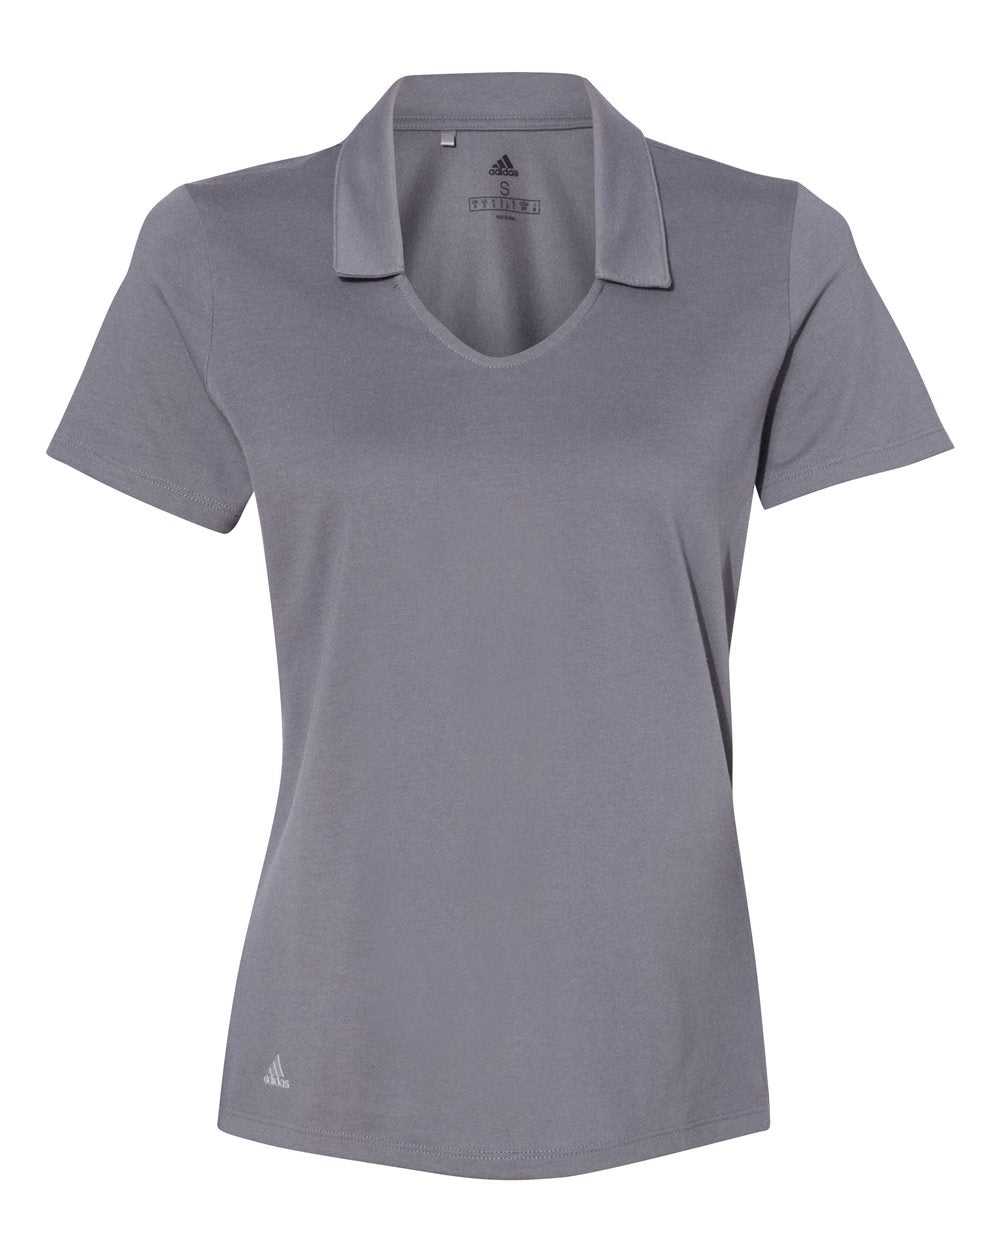 Adidas A323 Women's Cotton Blend Sport Shirt - Grey Four - HIT a Double